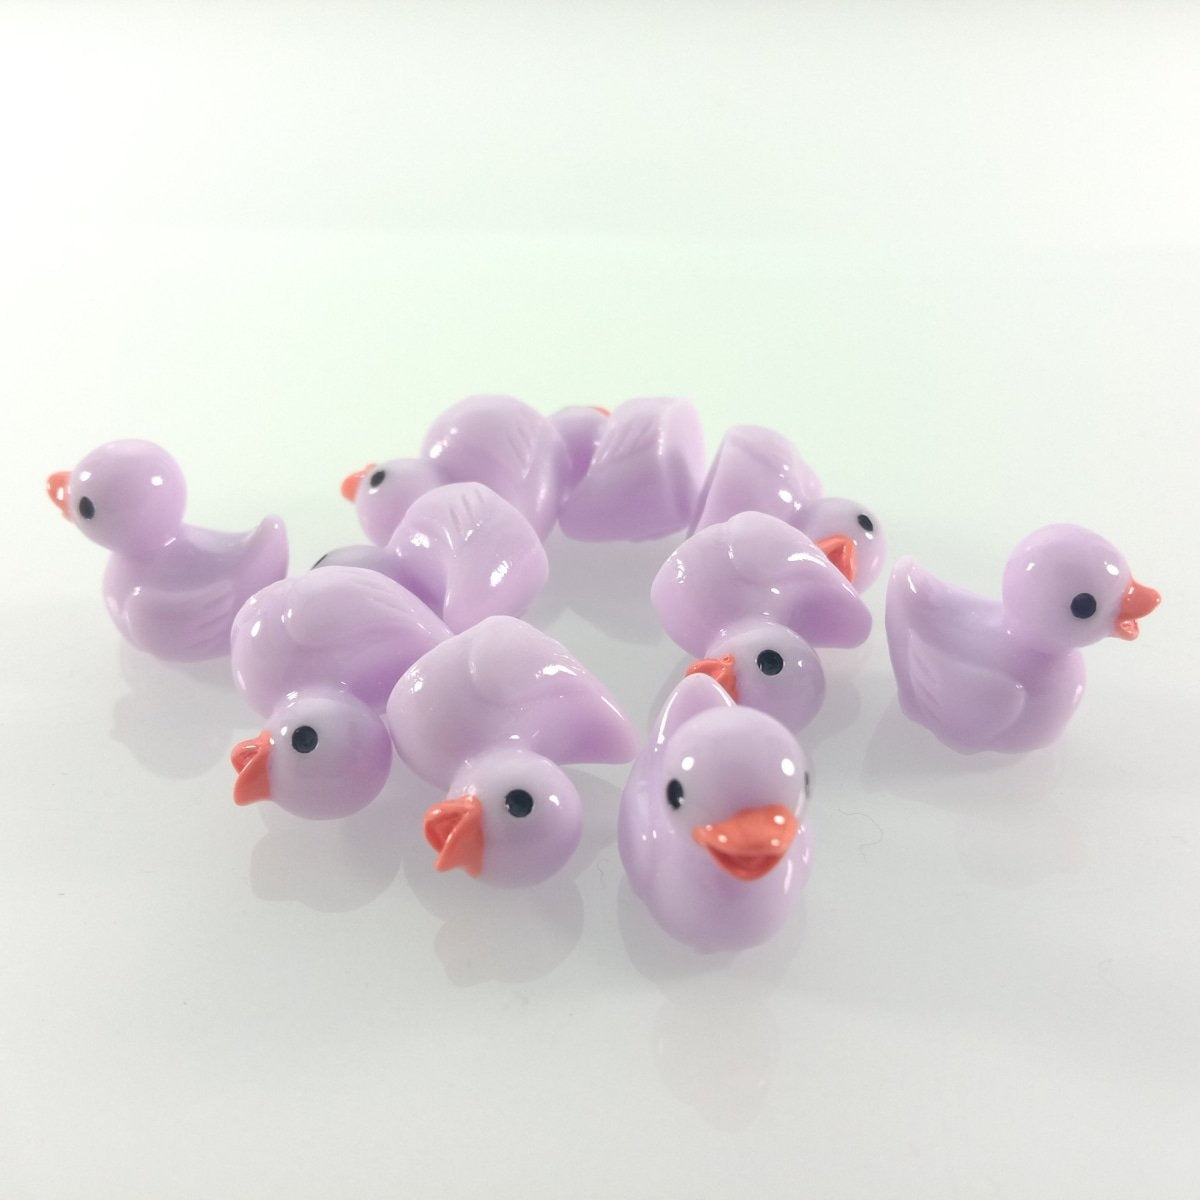 10Pcs Miniature Mini Garden Cow Rabbit Turtle Duck Unicorn Animal Figurines Purple Ducks Toys And